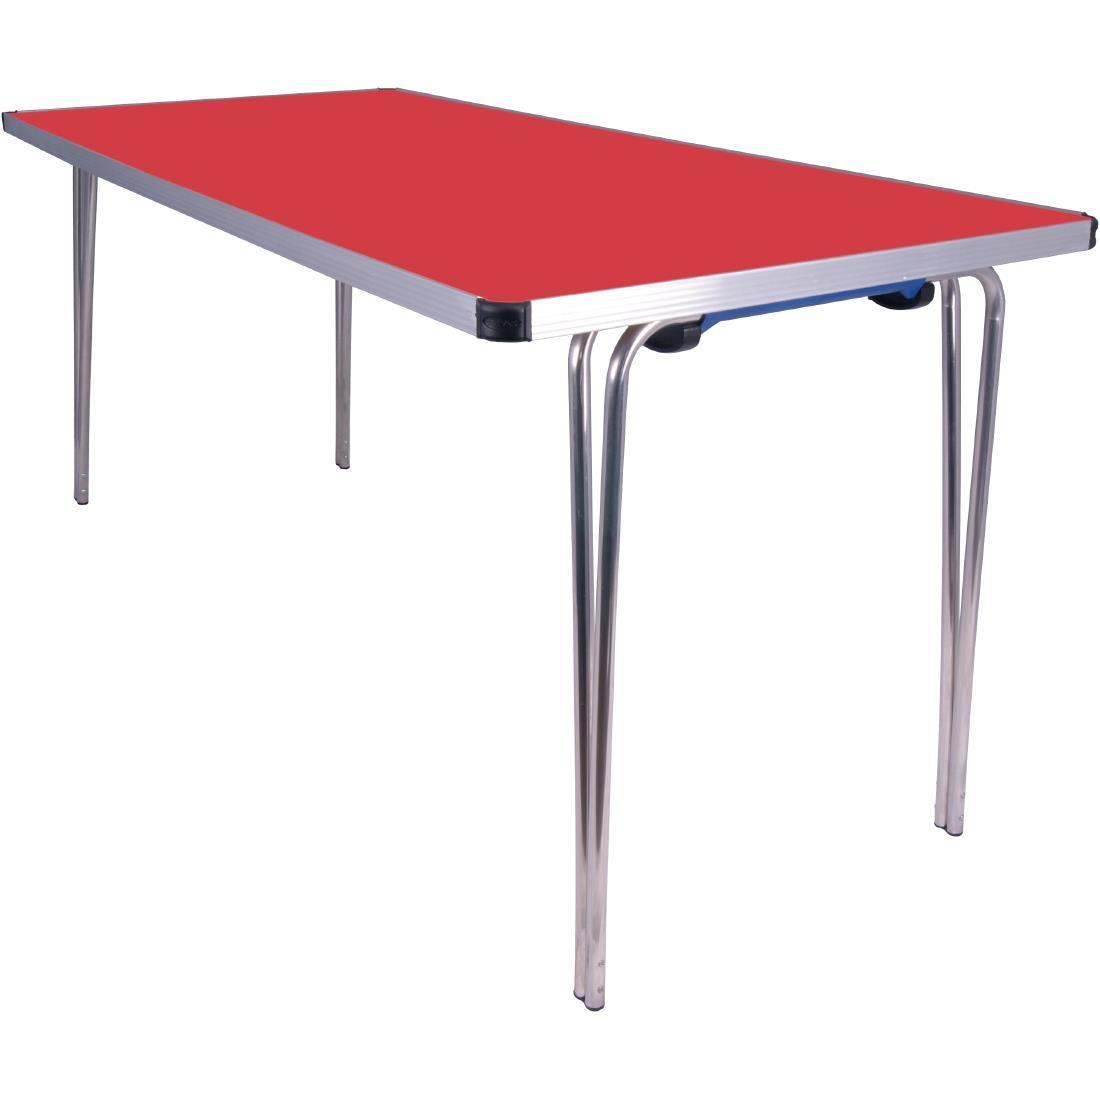 Gopak Contour Folding Table Red 5ft - DM697  - 1